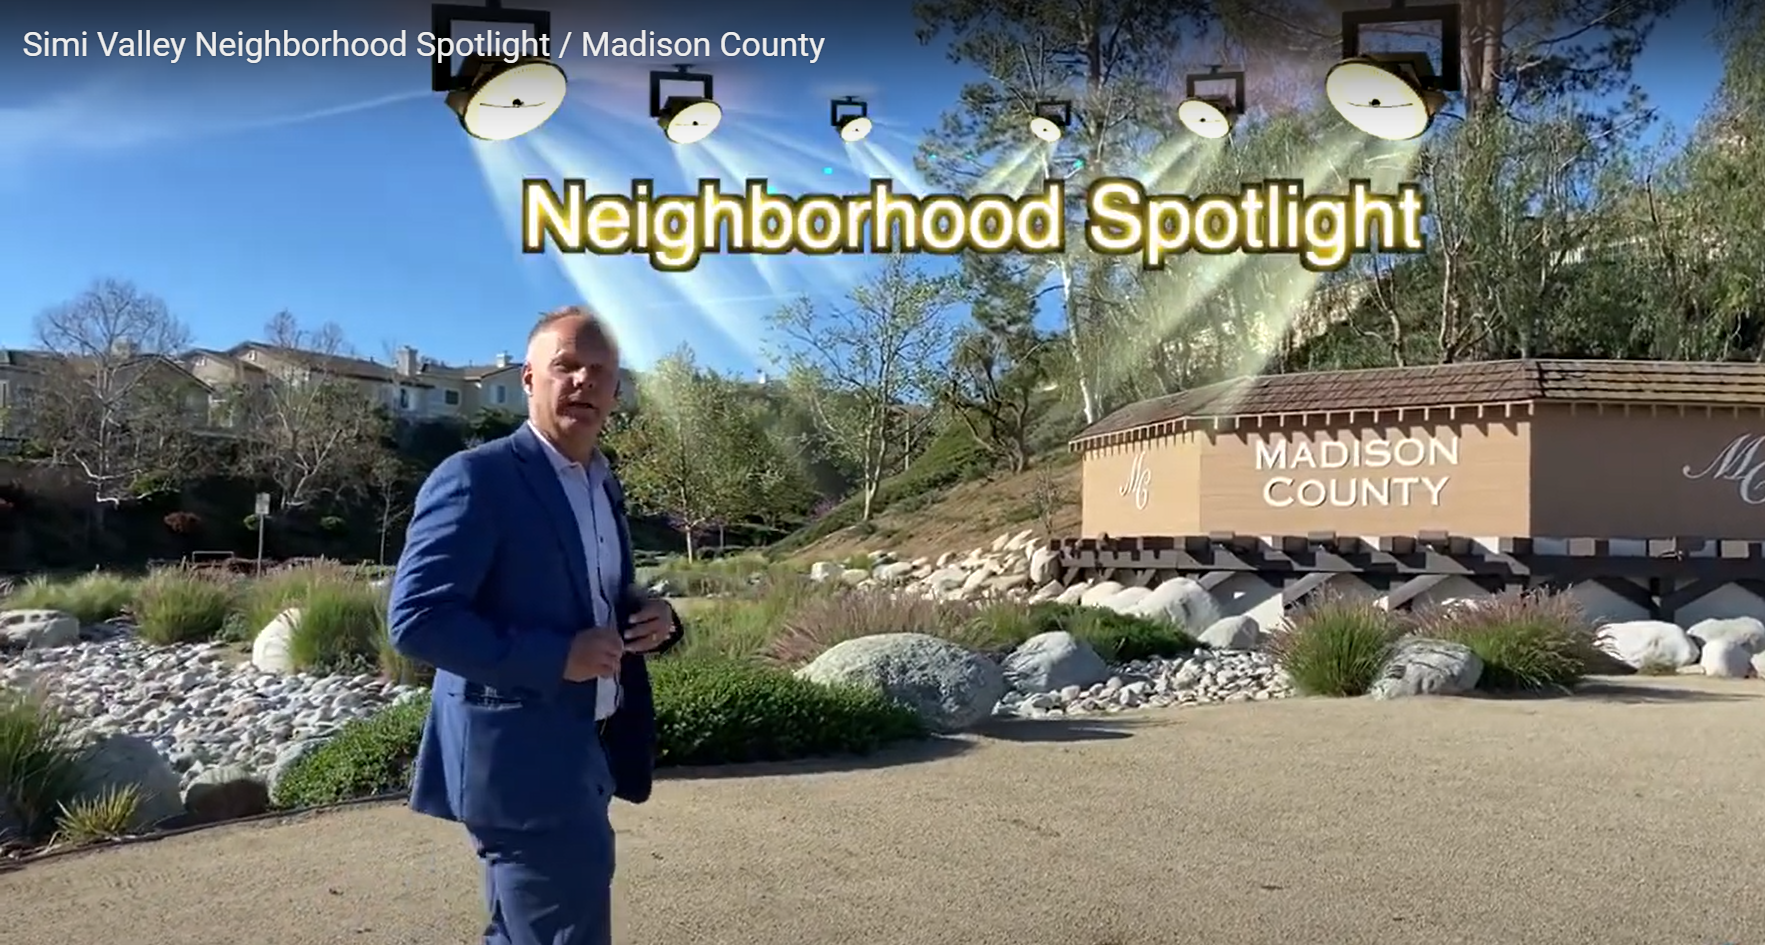 Simi Valley Neighborhood Spotlight / Madison County